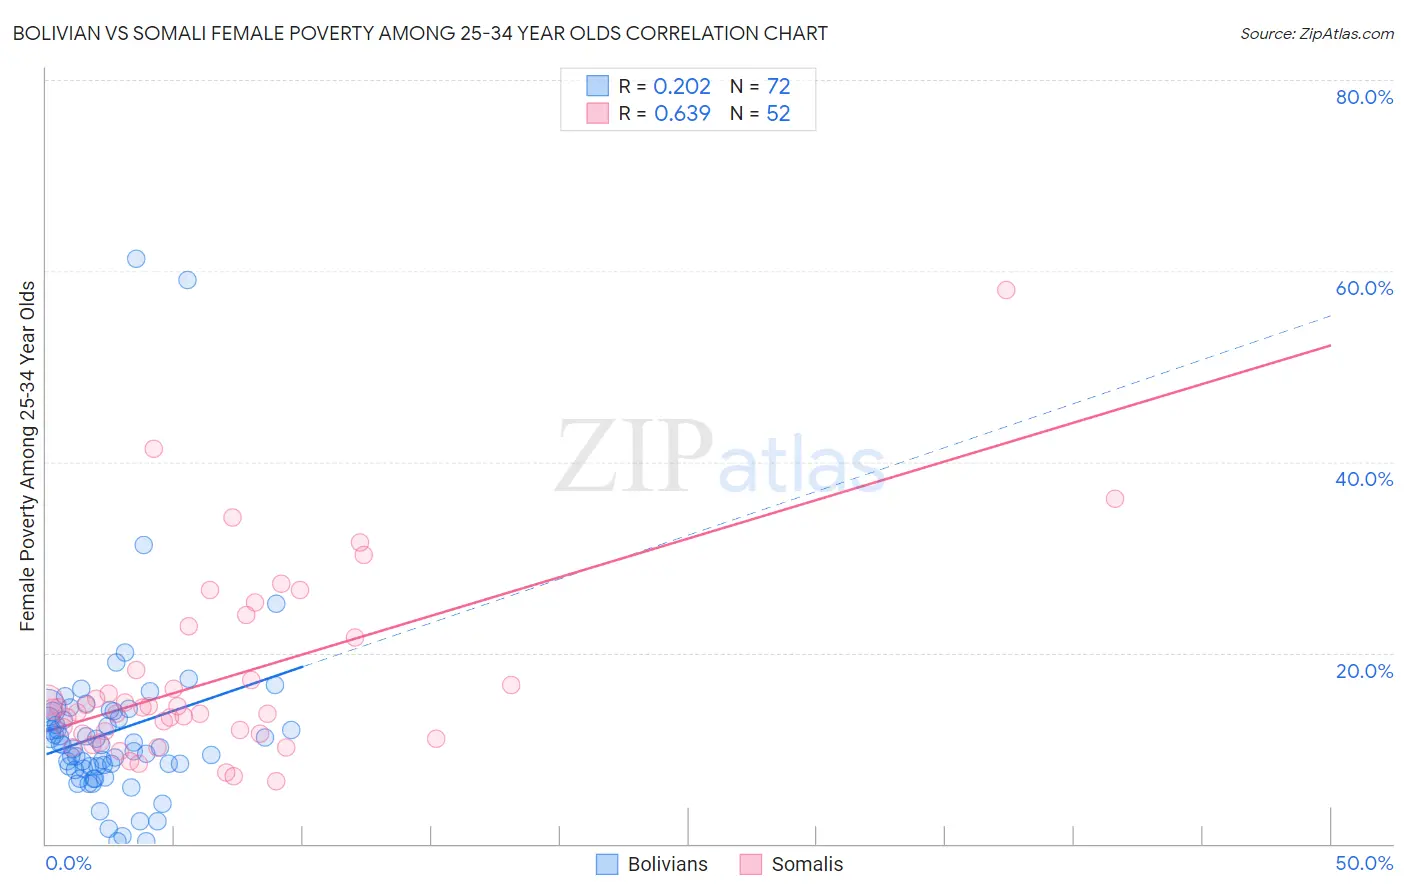 Bolivian vs Somali Female Poverty Among 25-34 Year Olds